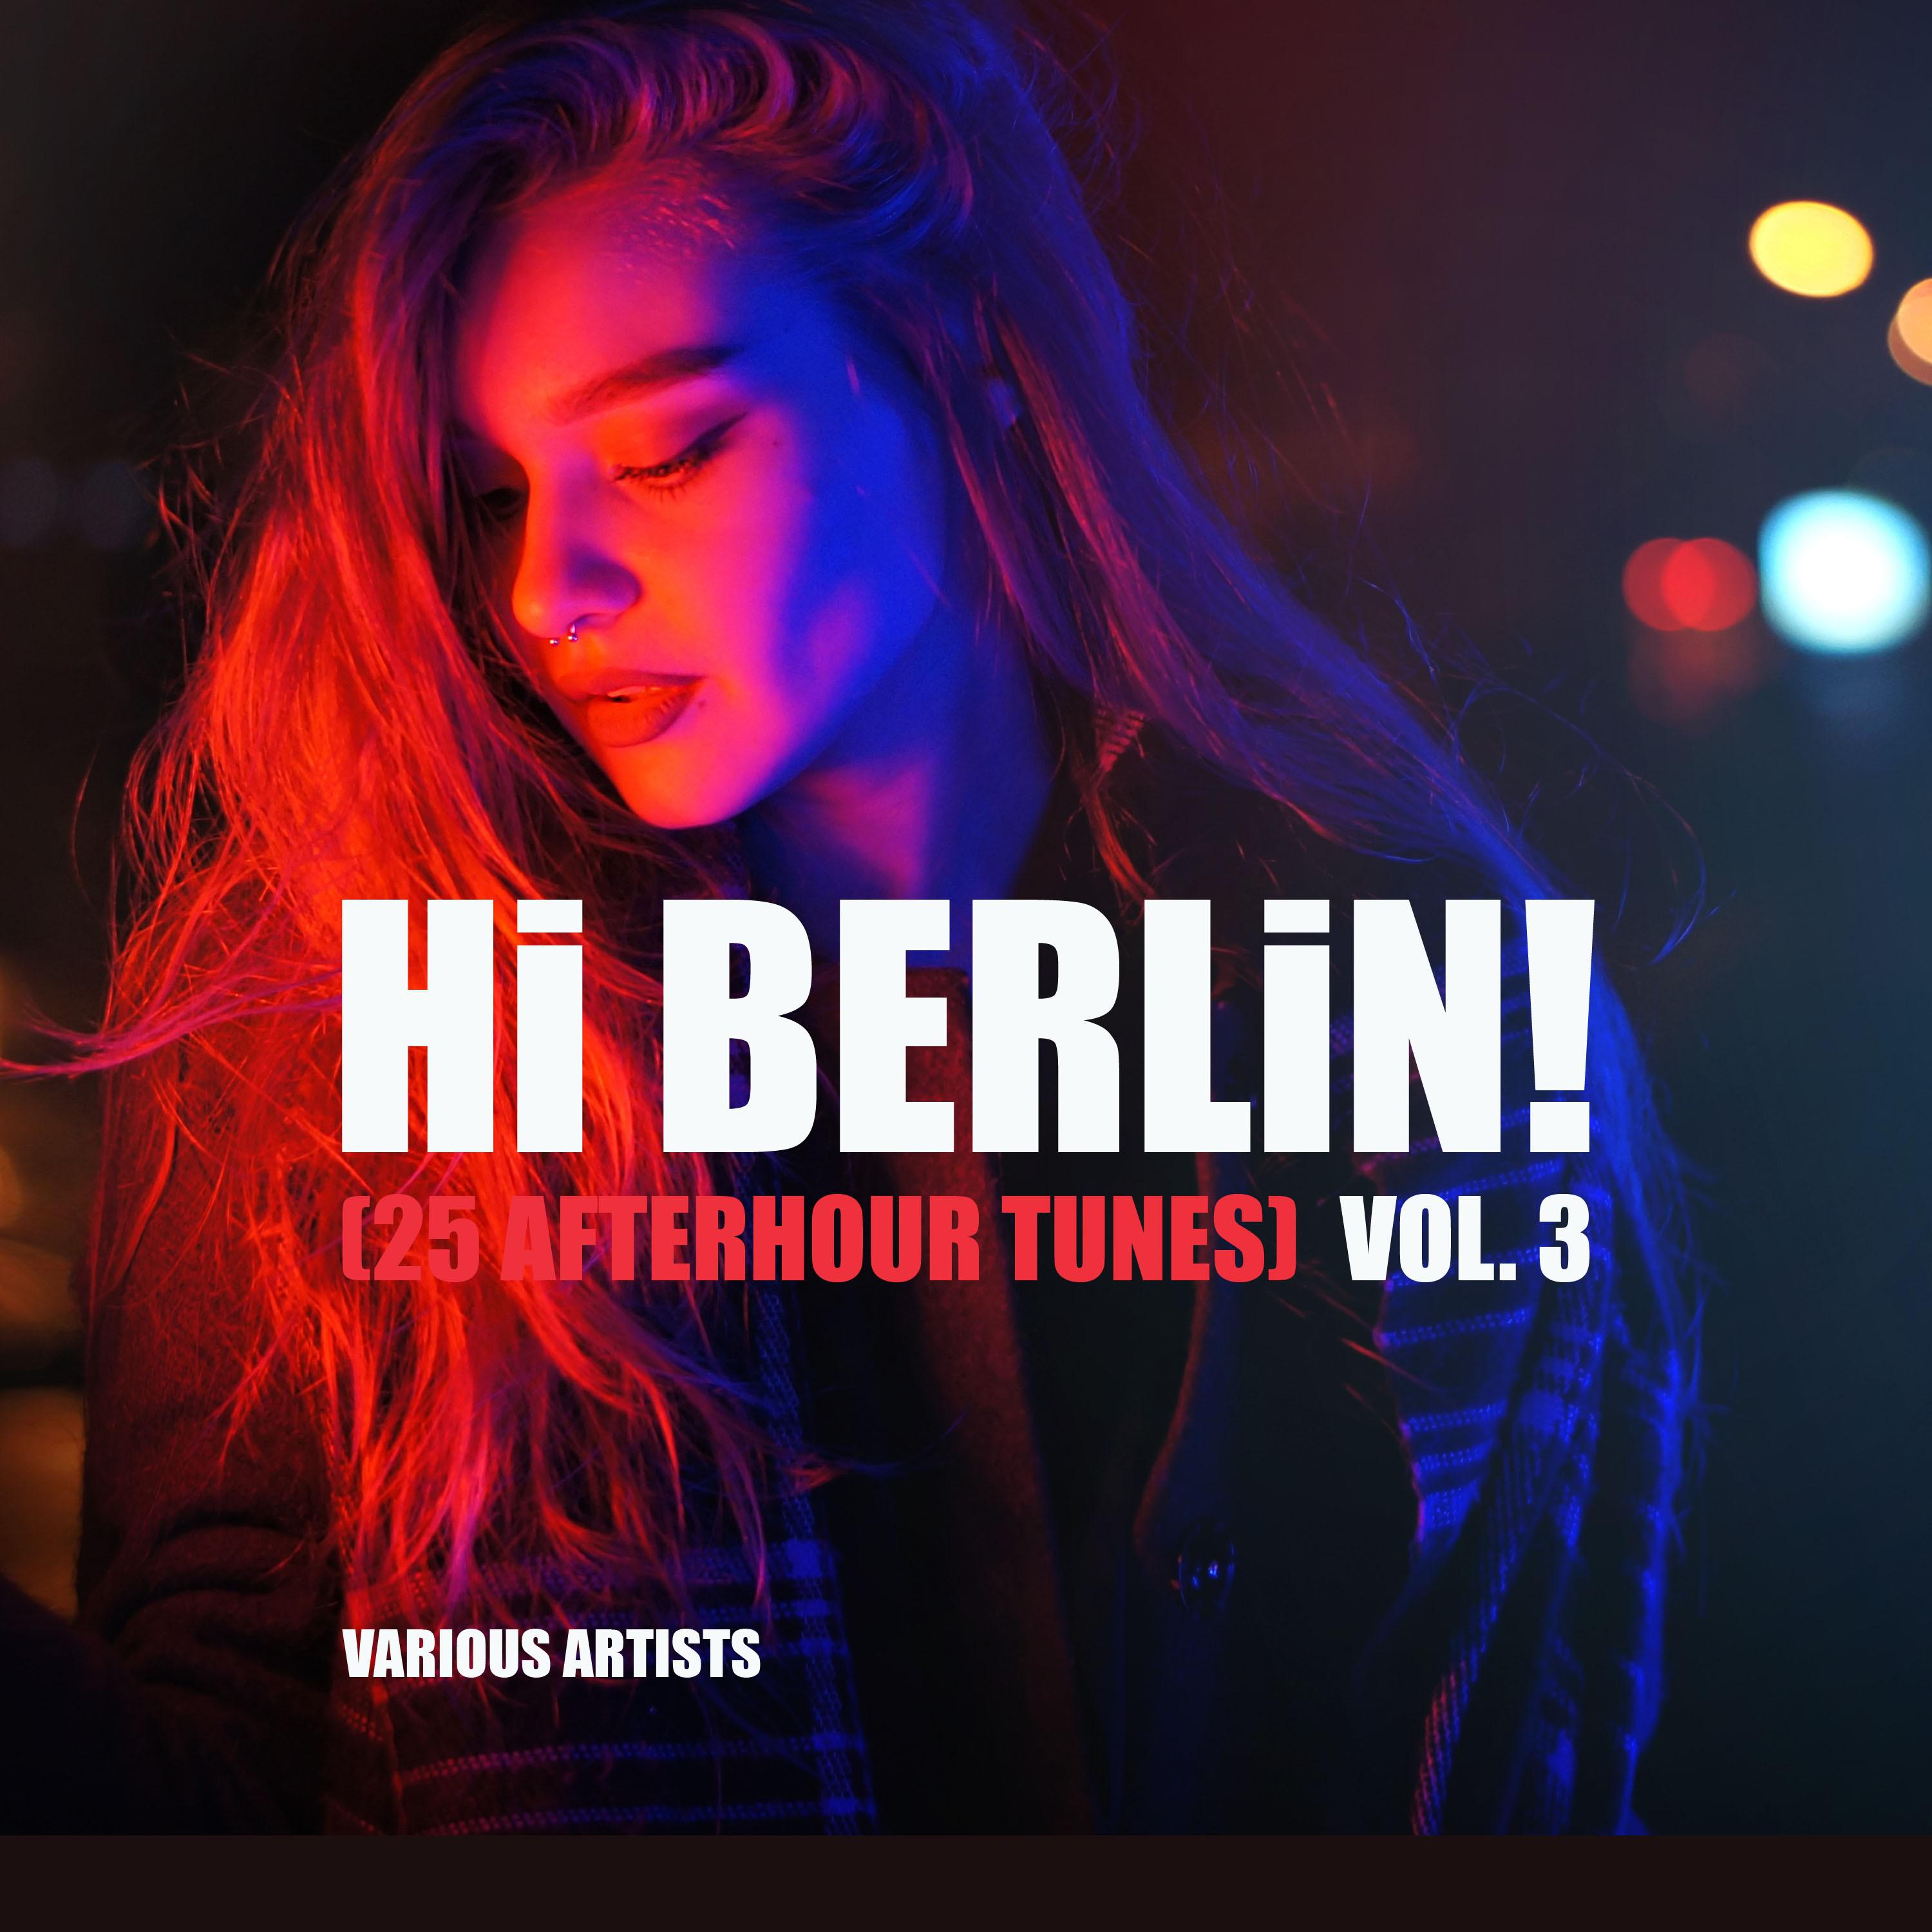 Hi Berlin! (25 Afterhour Tunes), Vol. 3